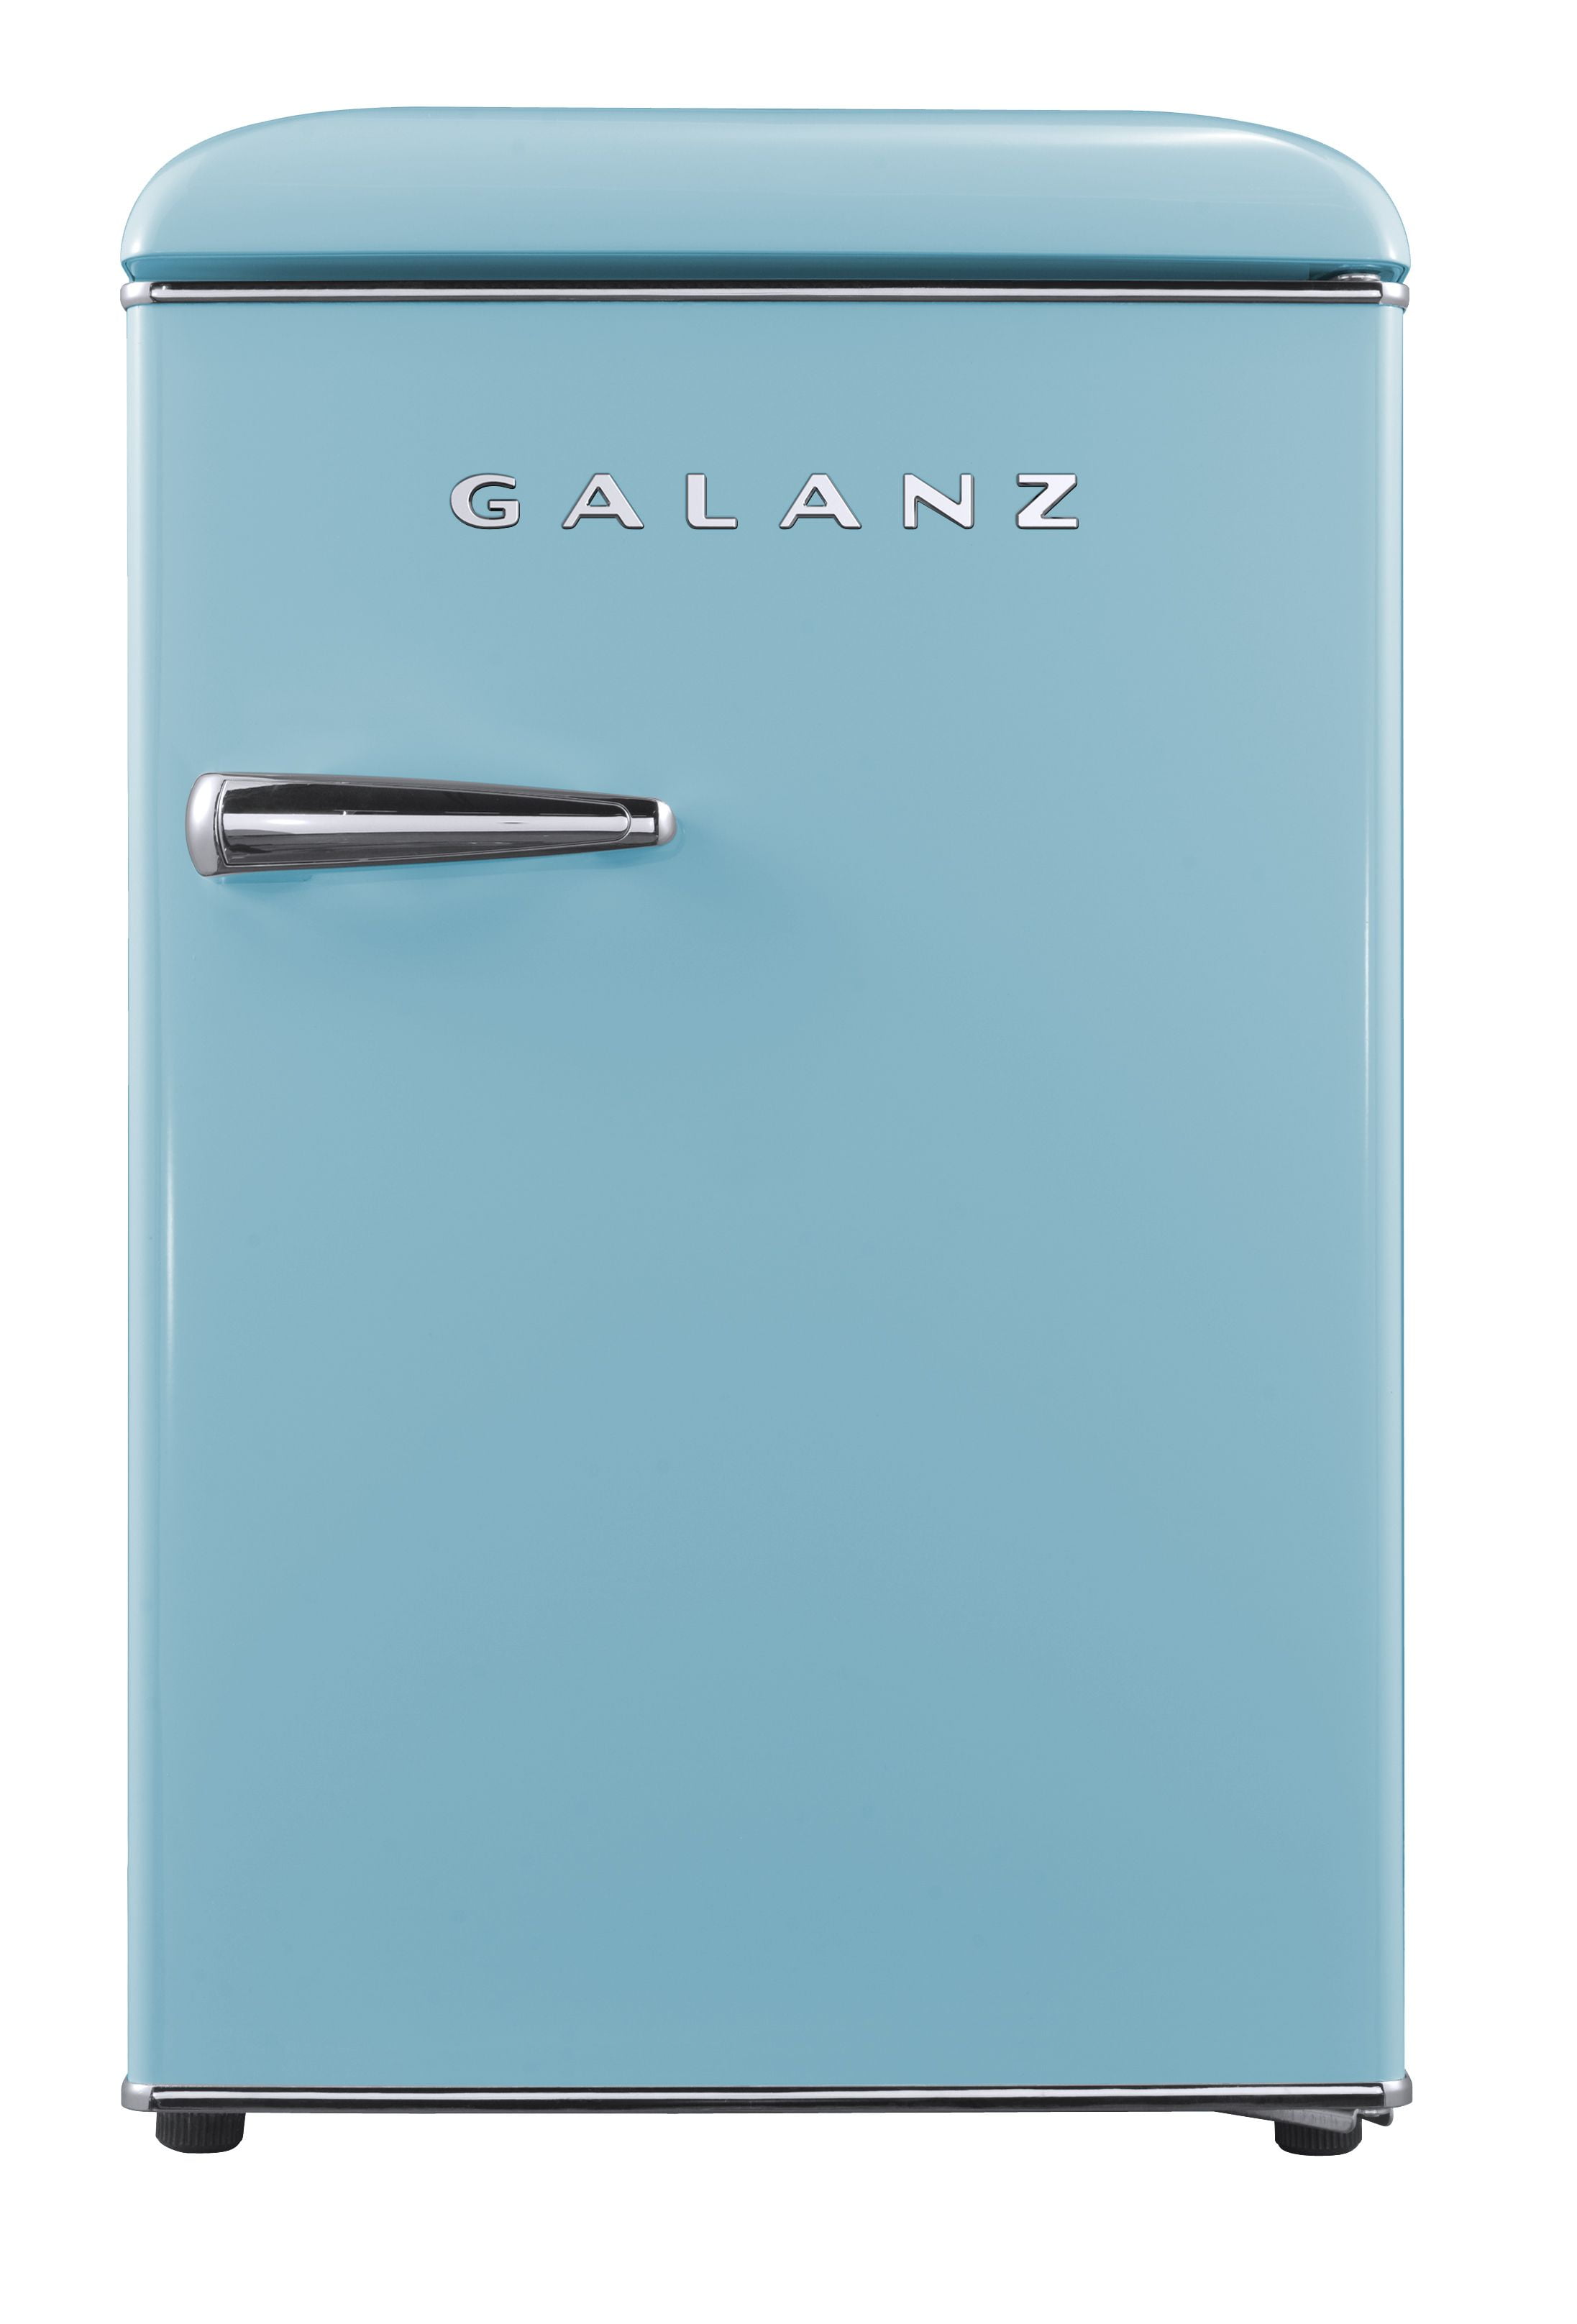 Galanz - Retro 2.5 Cu. Ft. Mini Fridge - Red  Mini fridge, Cool things to  buy, Retro fridge